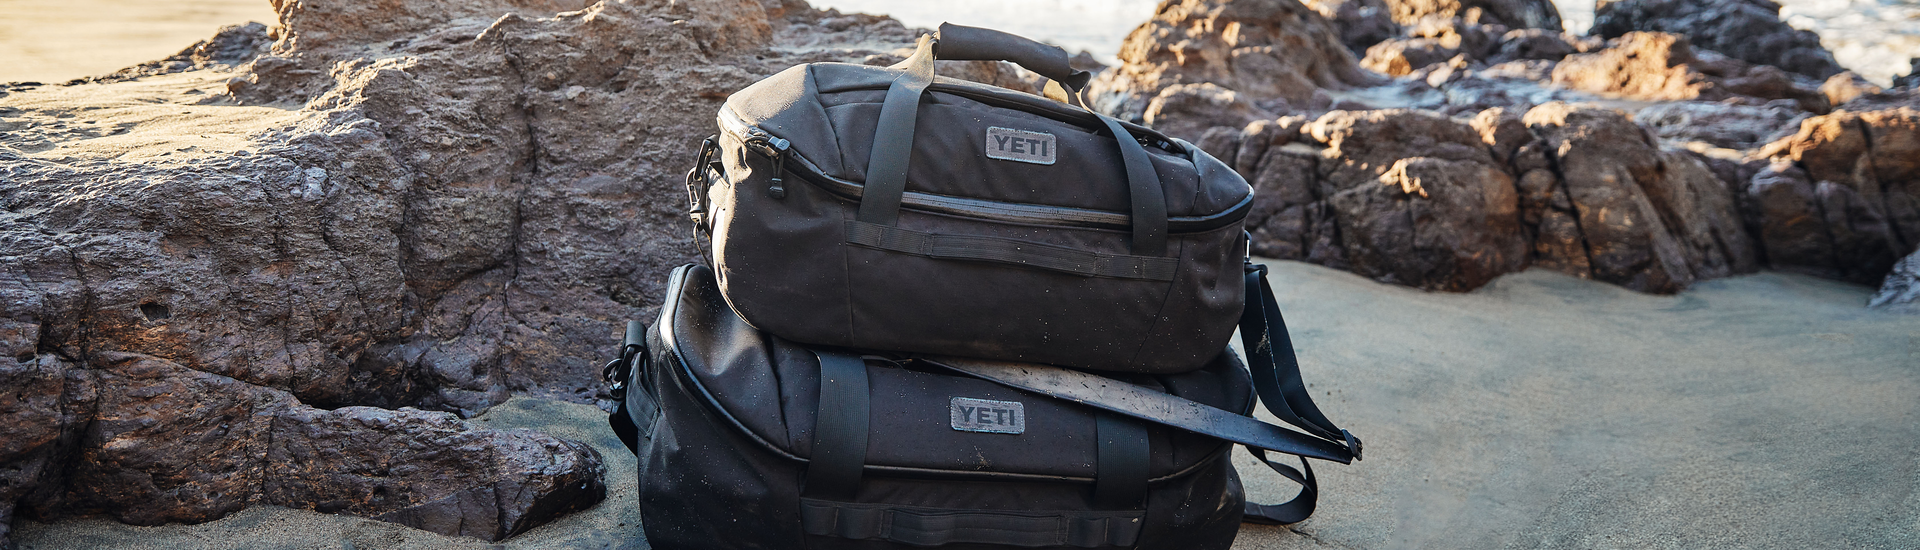 YETI Crossroads Bags: Backpacks, Duffels And More – YETI EUROPE